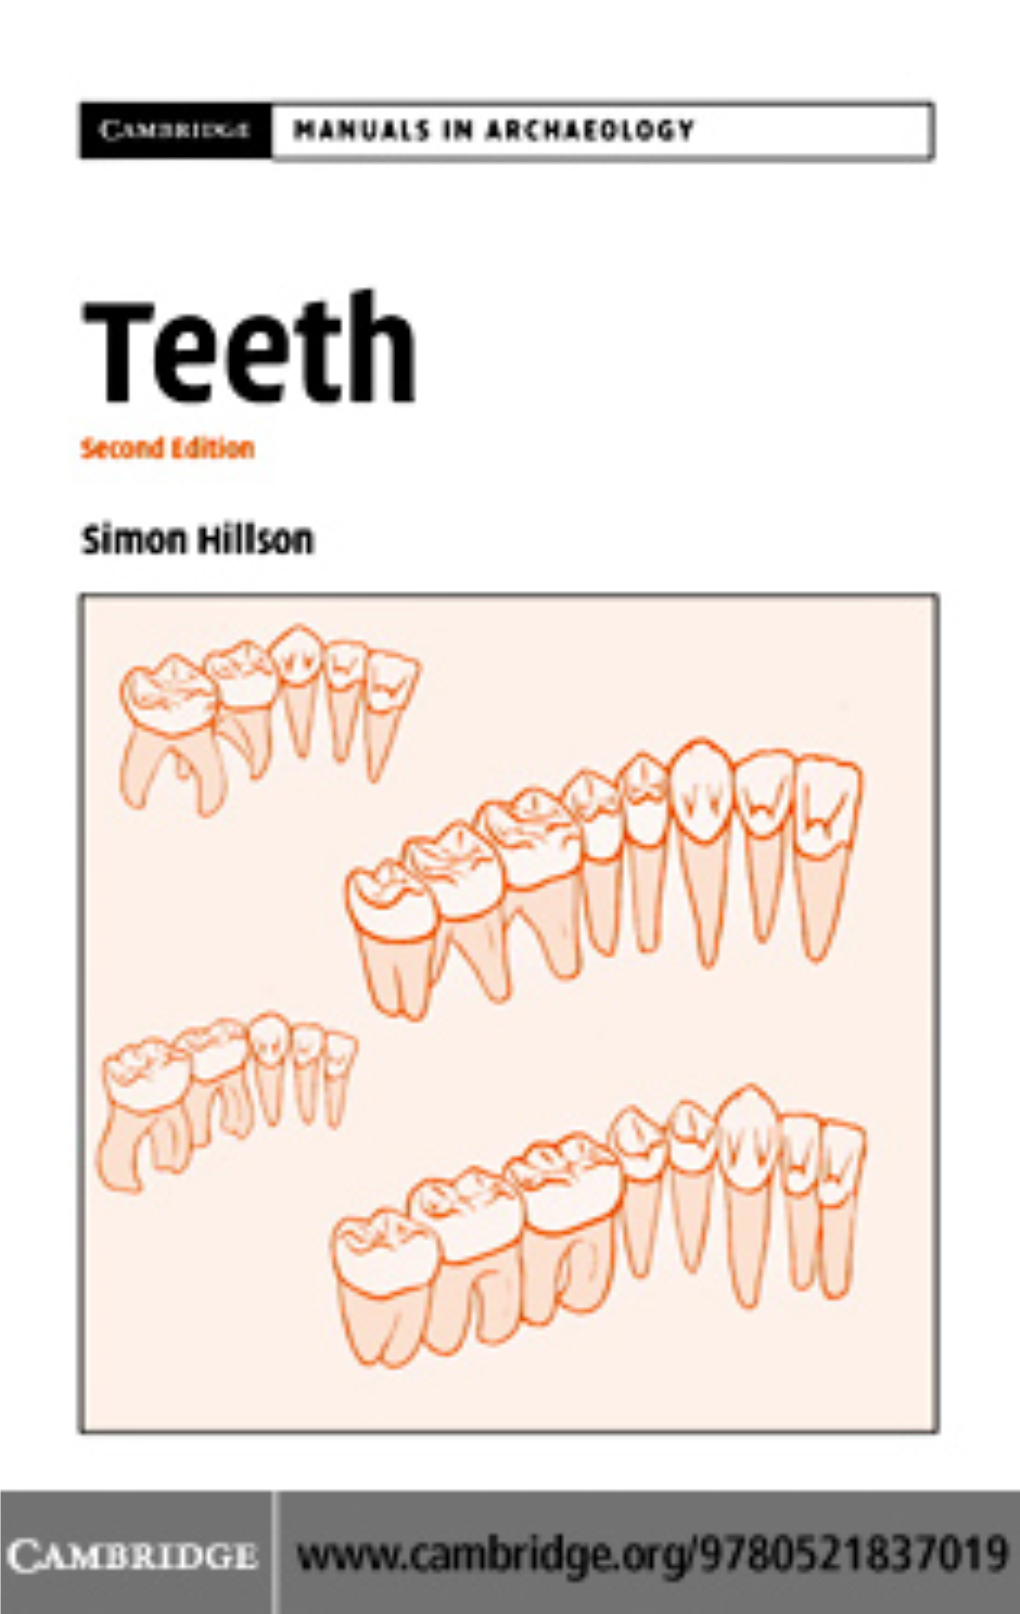 Teeth (Cambridge Manuals in Archaeology)